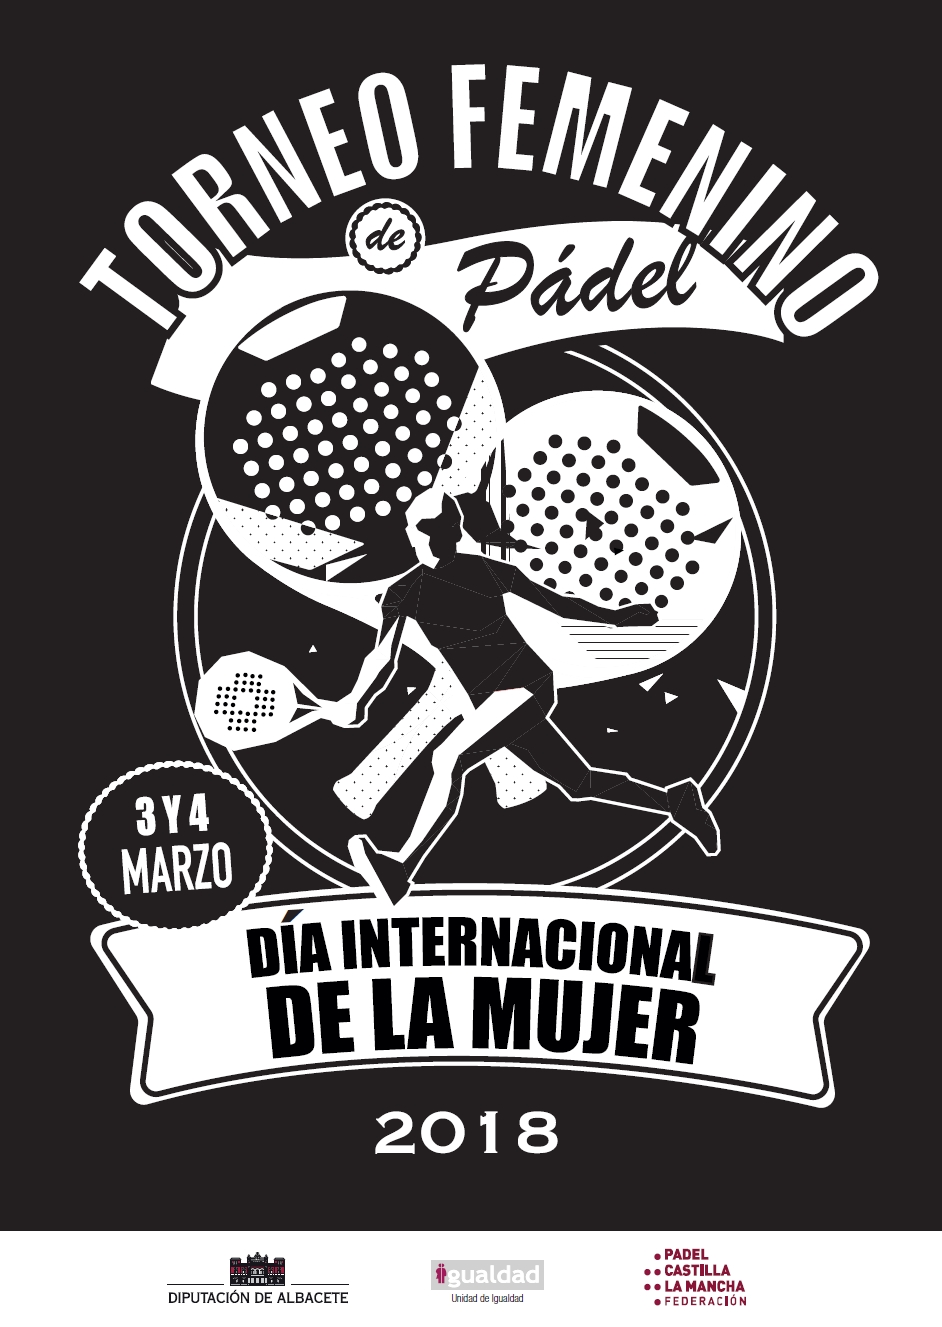 Torneo Femenino Pádel 2018